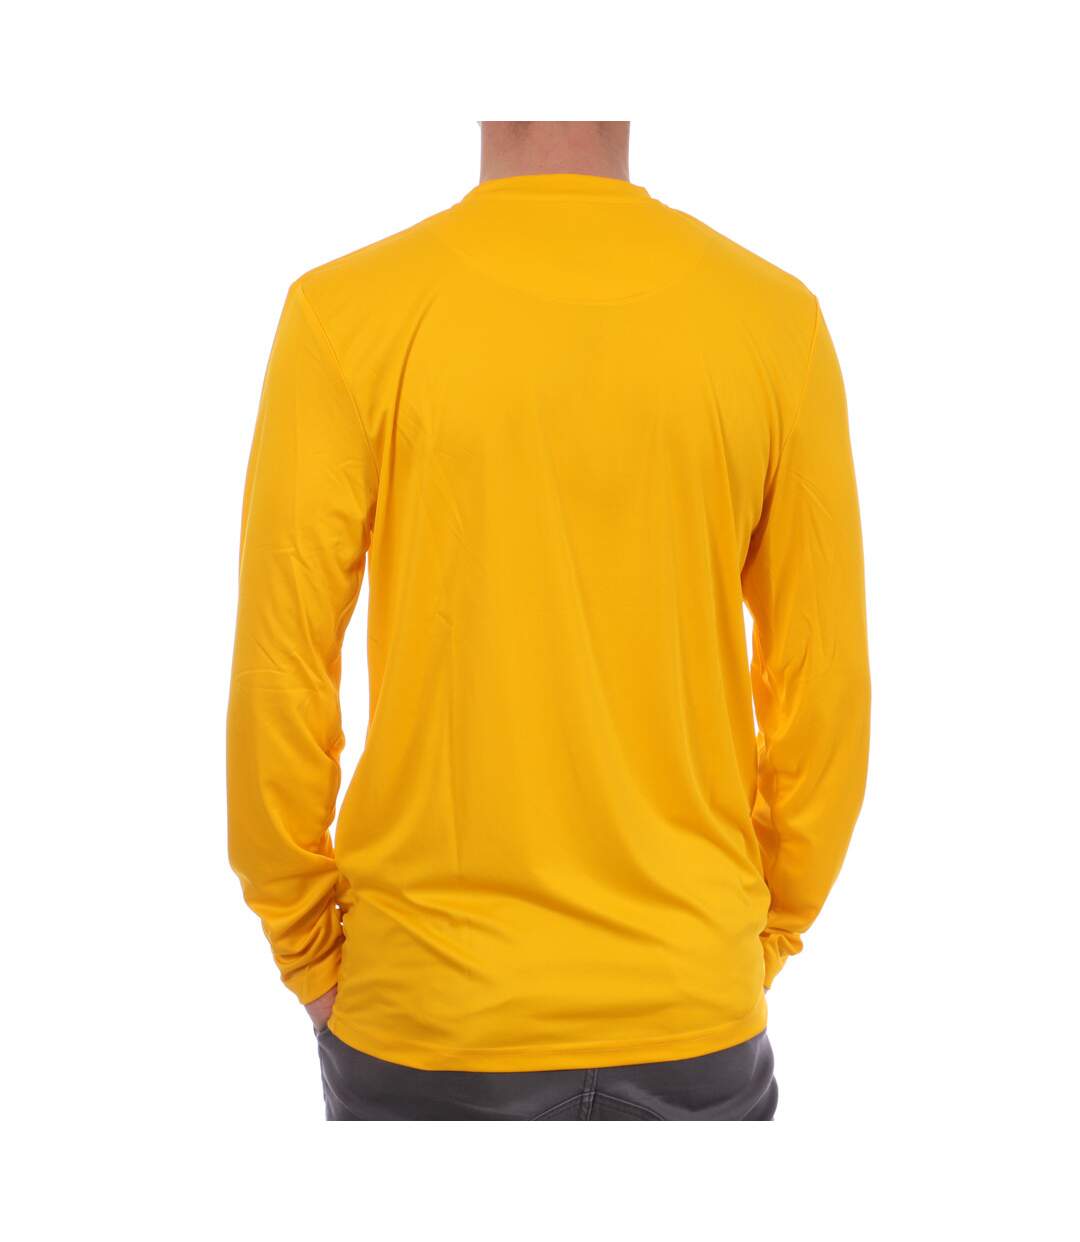 Maillot manches longues jaune homme Hungaria Shirt Premium